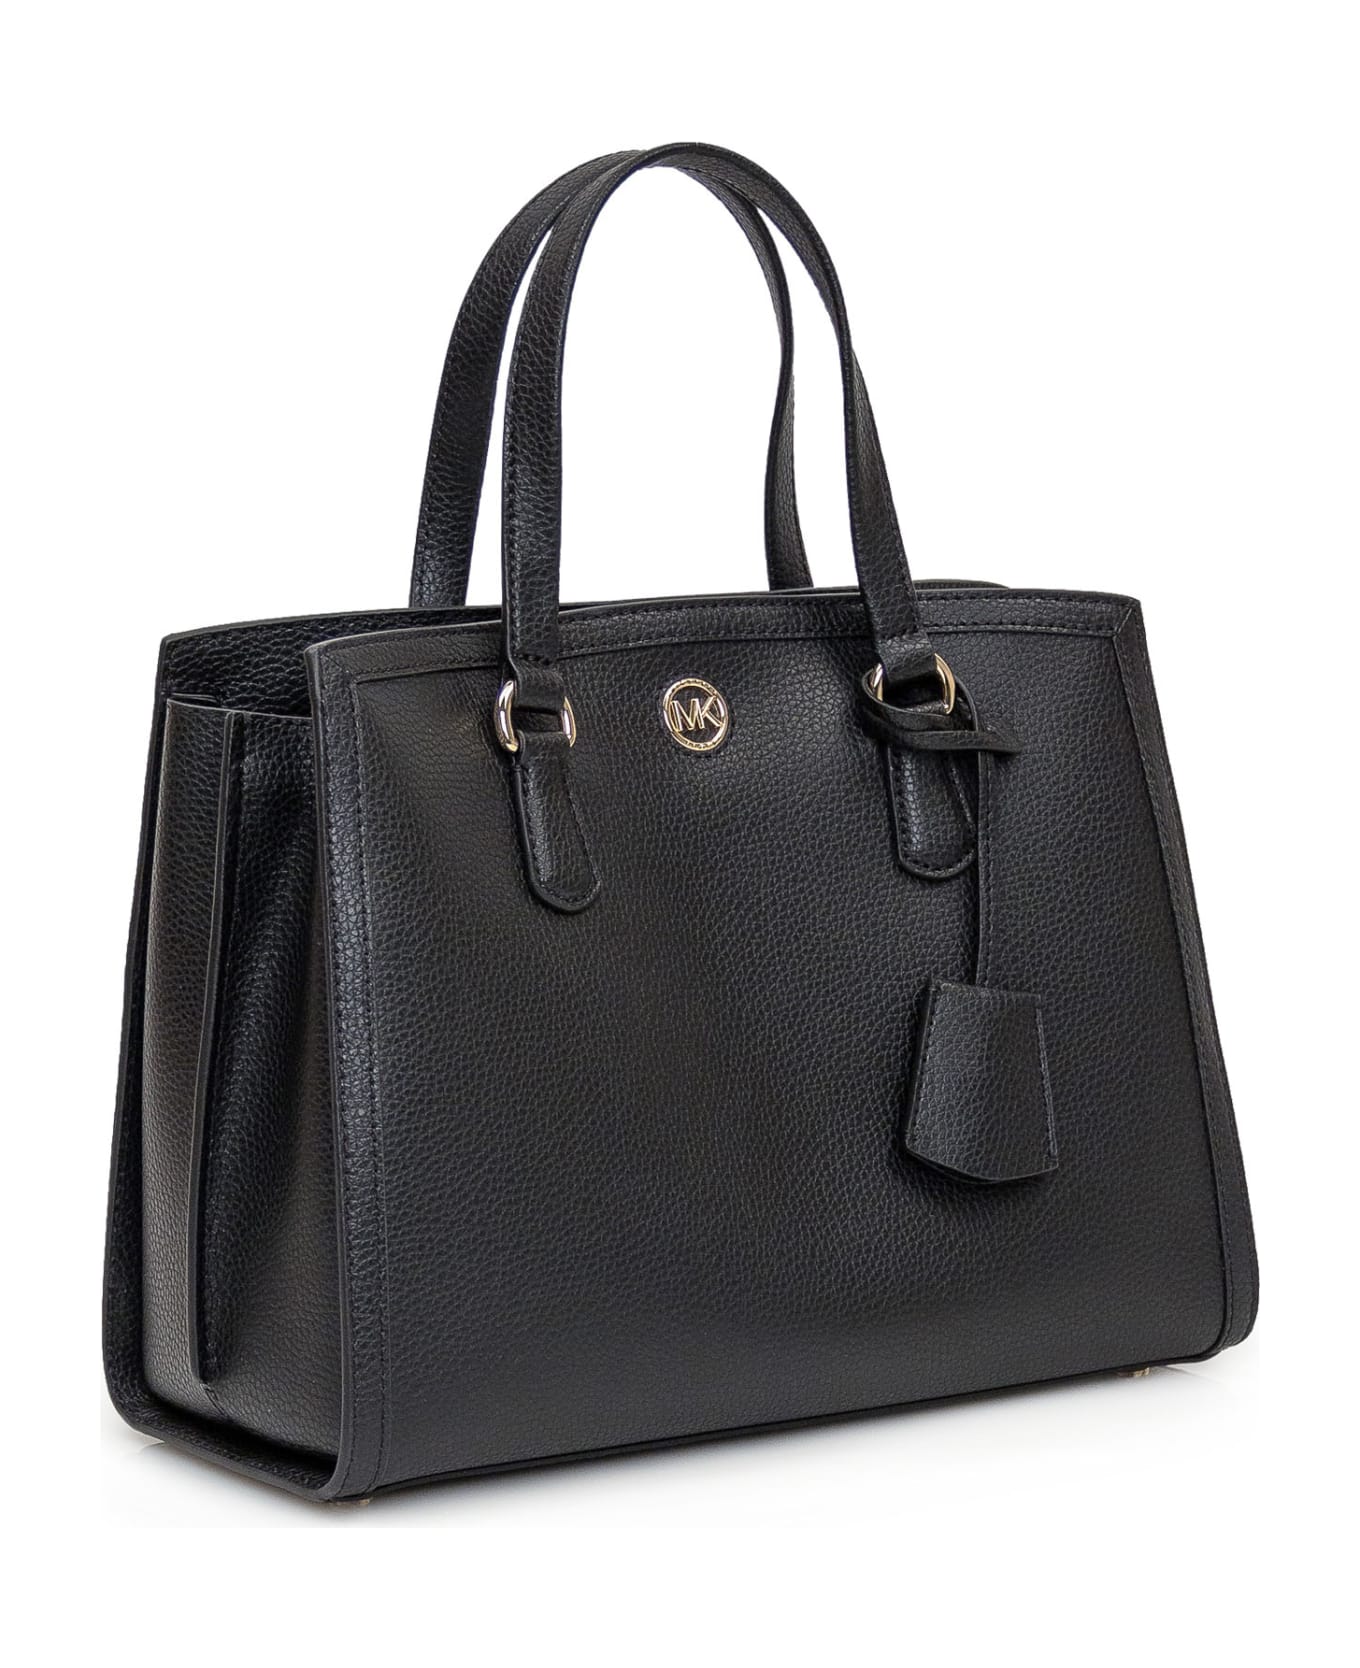 Michael Kors Chantal Leather Handbag - Black